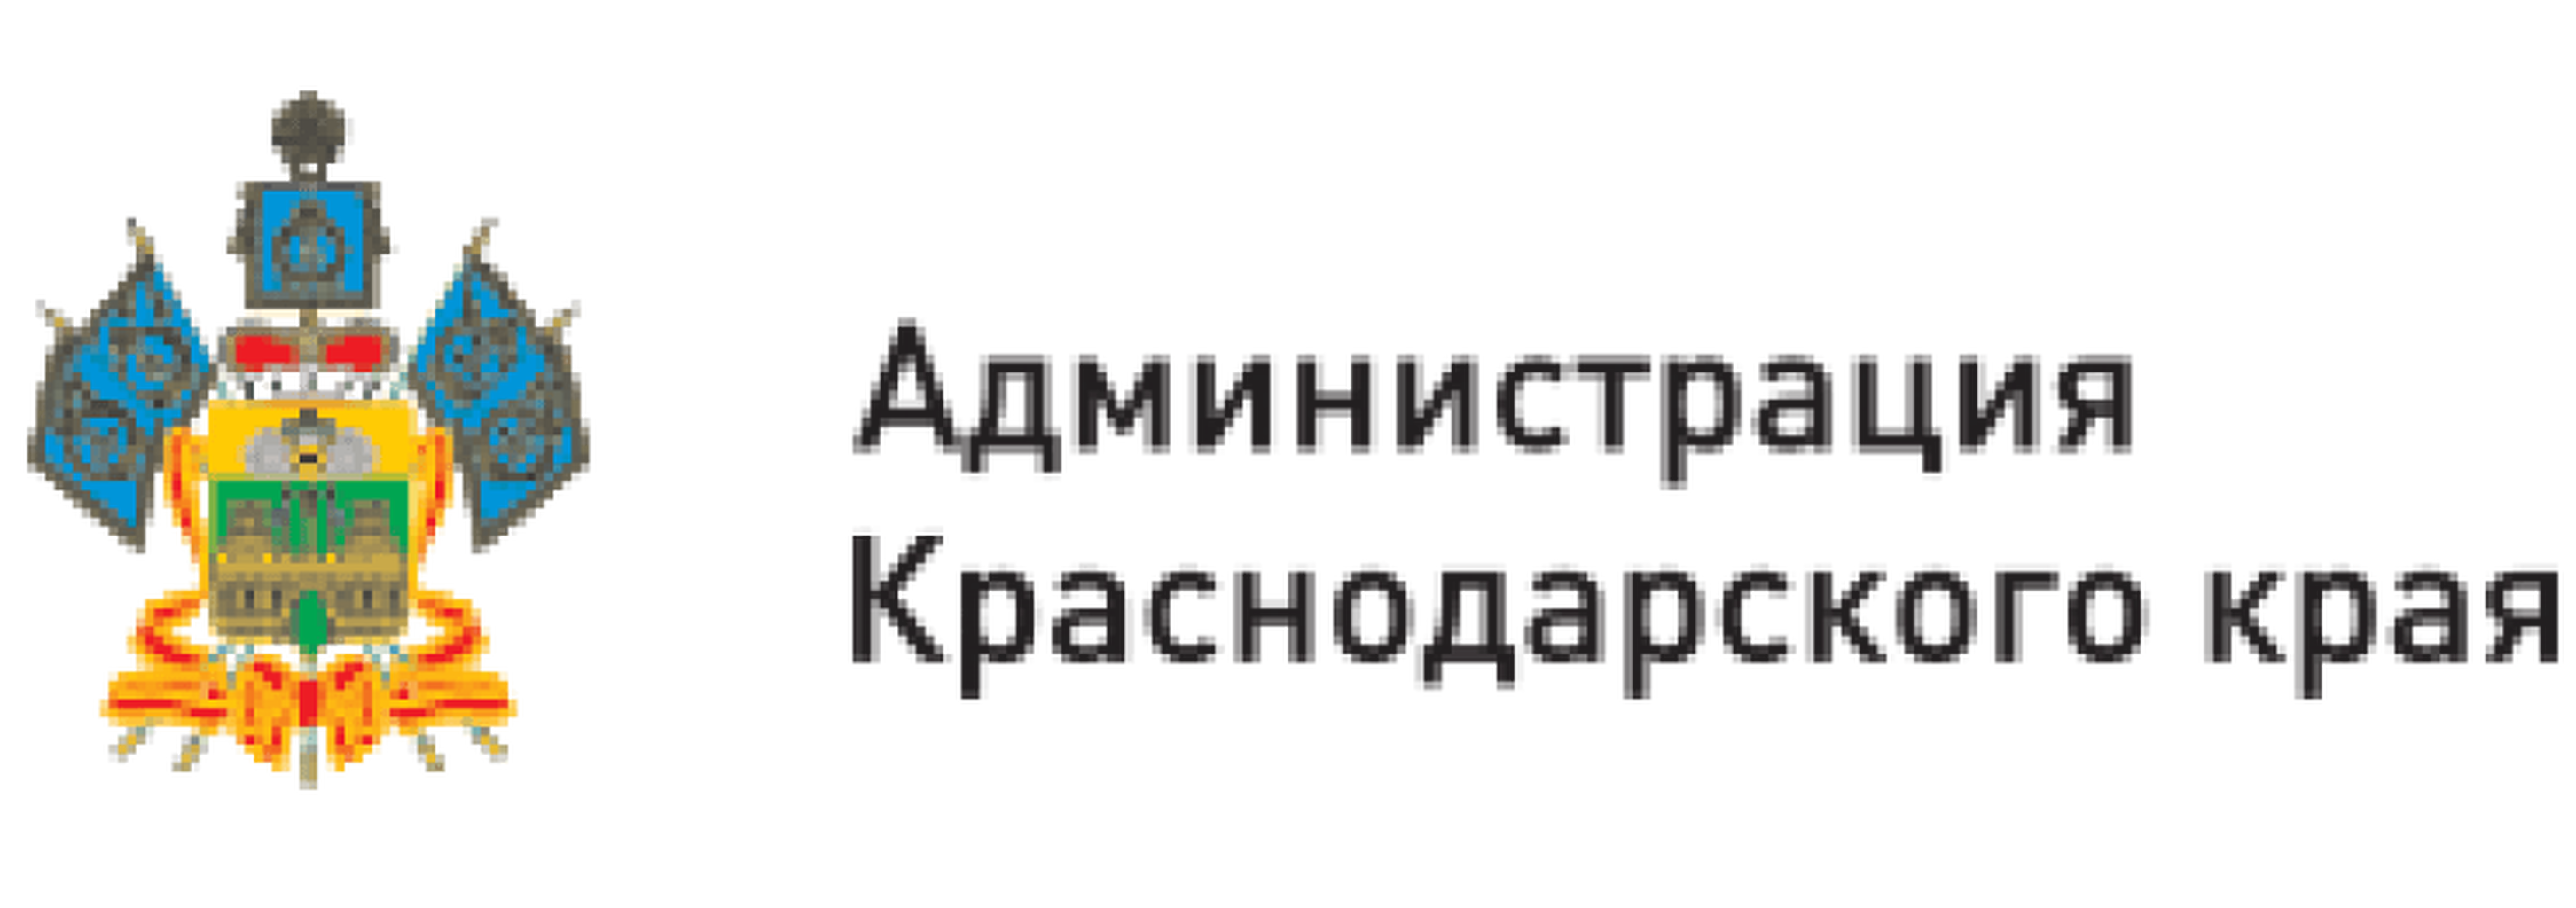 Администрация Краснодарского края лого. Правительство Краснодарского края логотип. Администрация Краснодарского края эмблема. Огрн краснодарского края